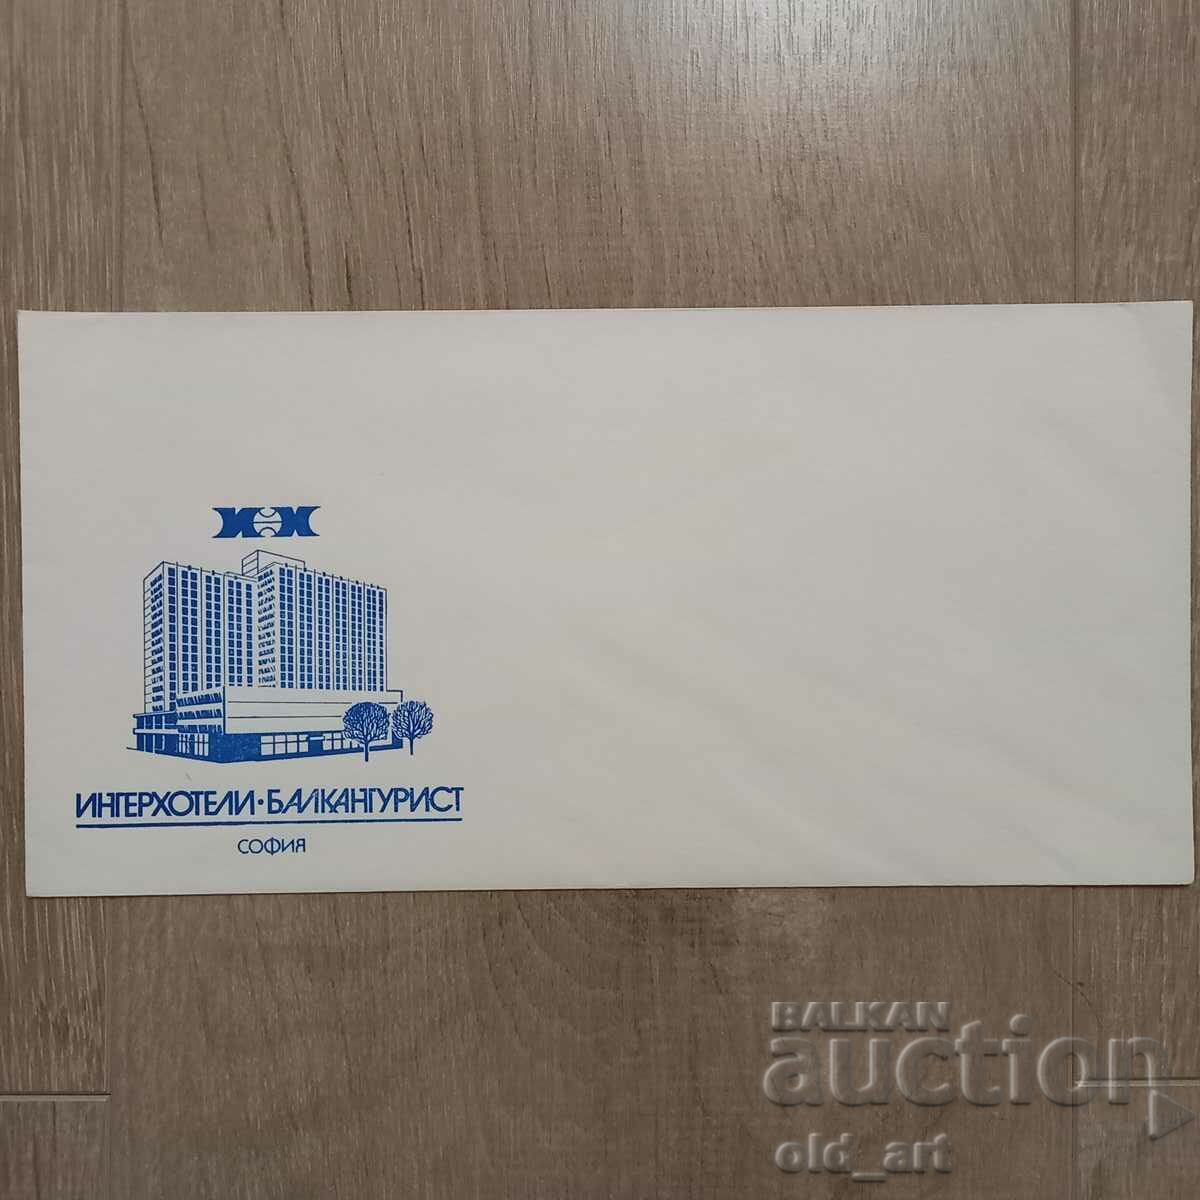 Postal envelope - Interhotels - Balkantourist